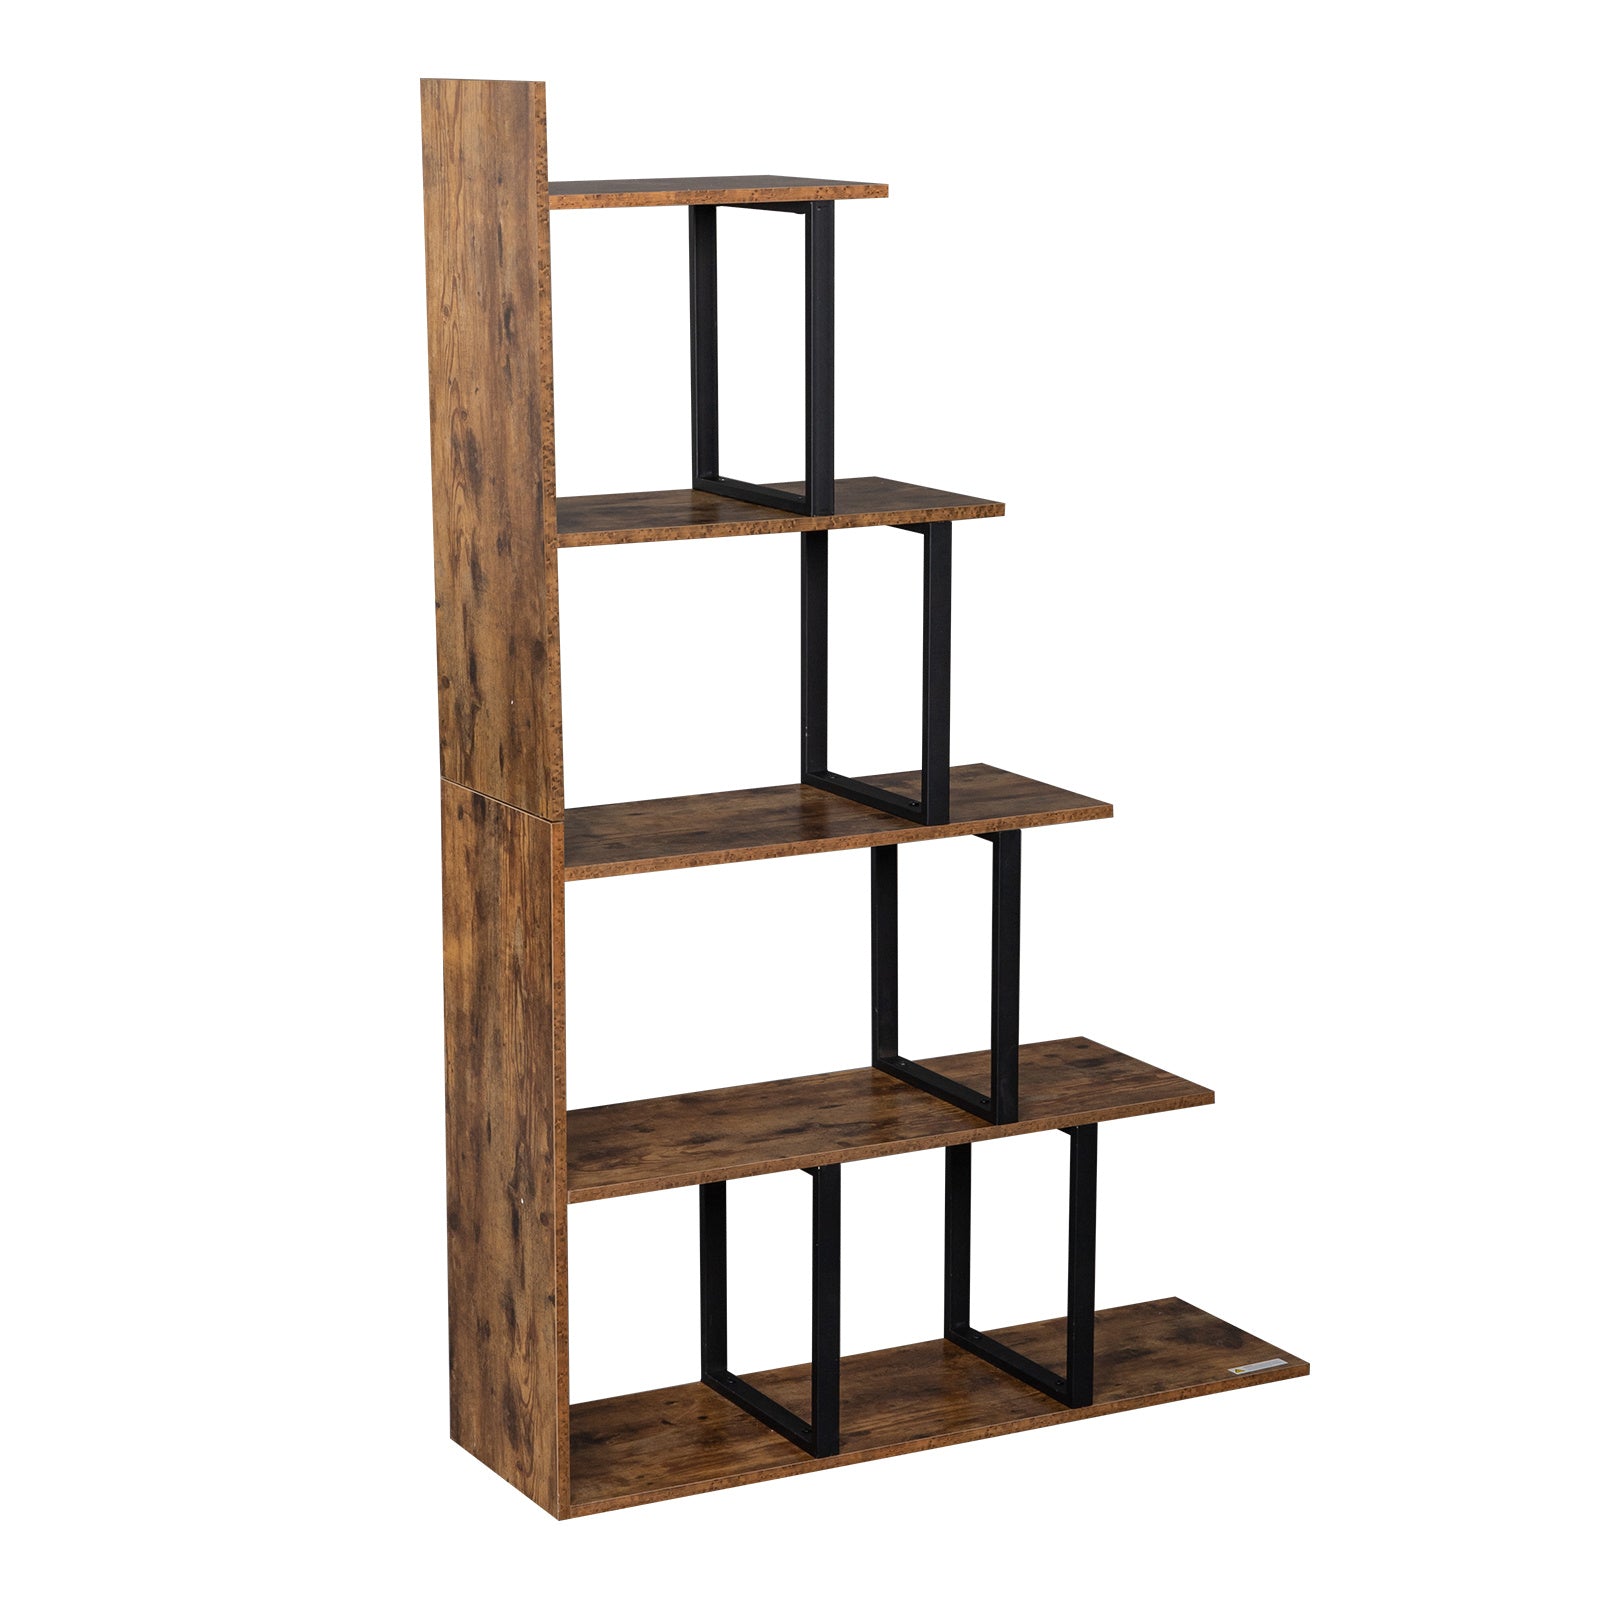 Wooden 5-Tier Bookshelf, Industrial Vintage Freestanding Bookcase Multipurpose Storage Display Rack, Wood Look Accent Metal Organizer Frame for Living Room Home Office RT